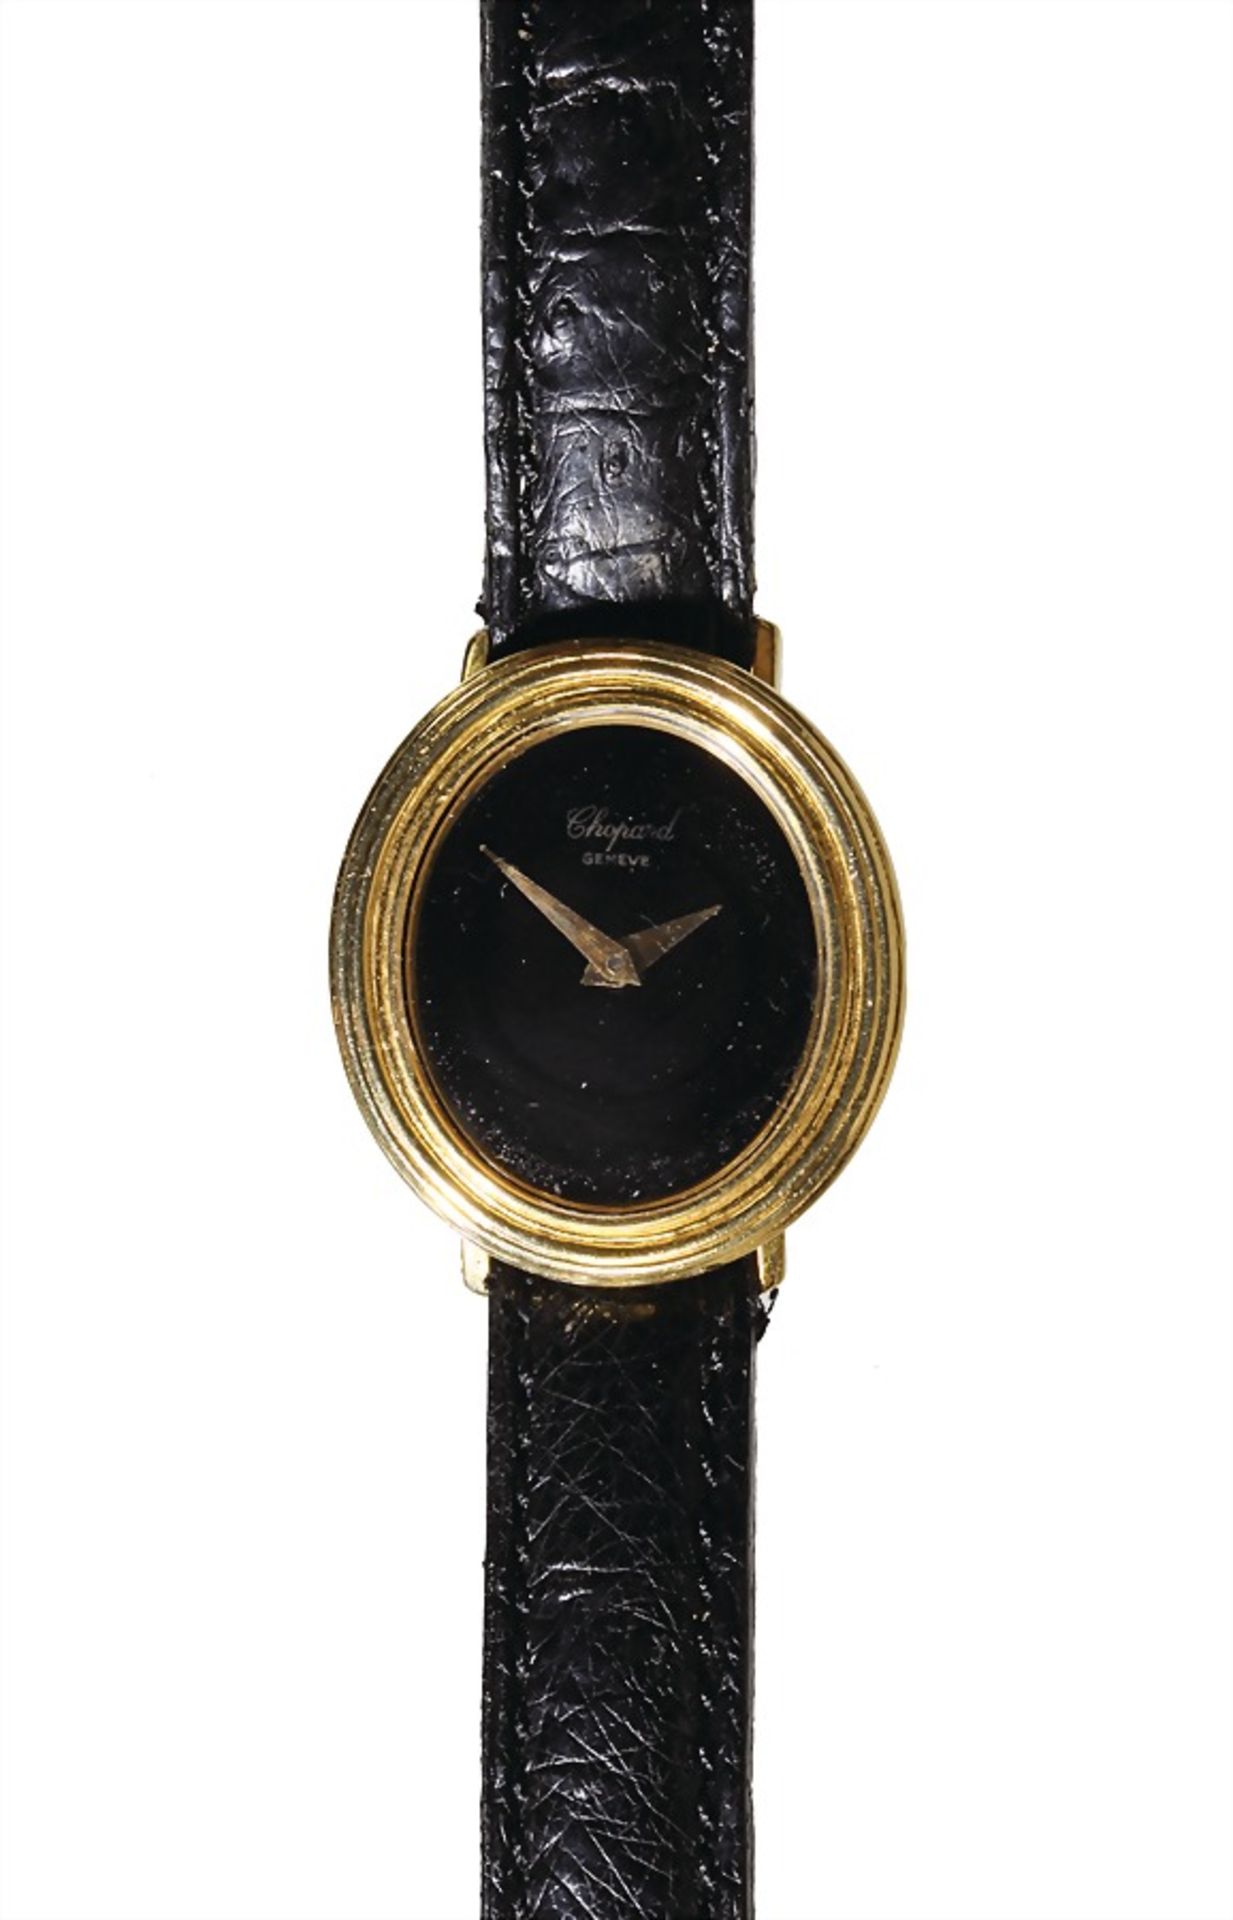 ladies watch "CHOPARD", Switzerland 1978, manual winding, yelow gold 750/000, black clockface,